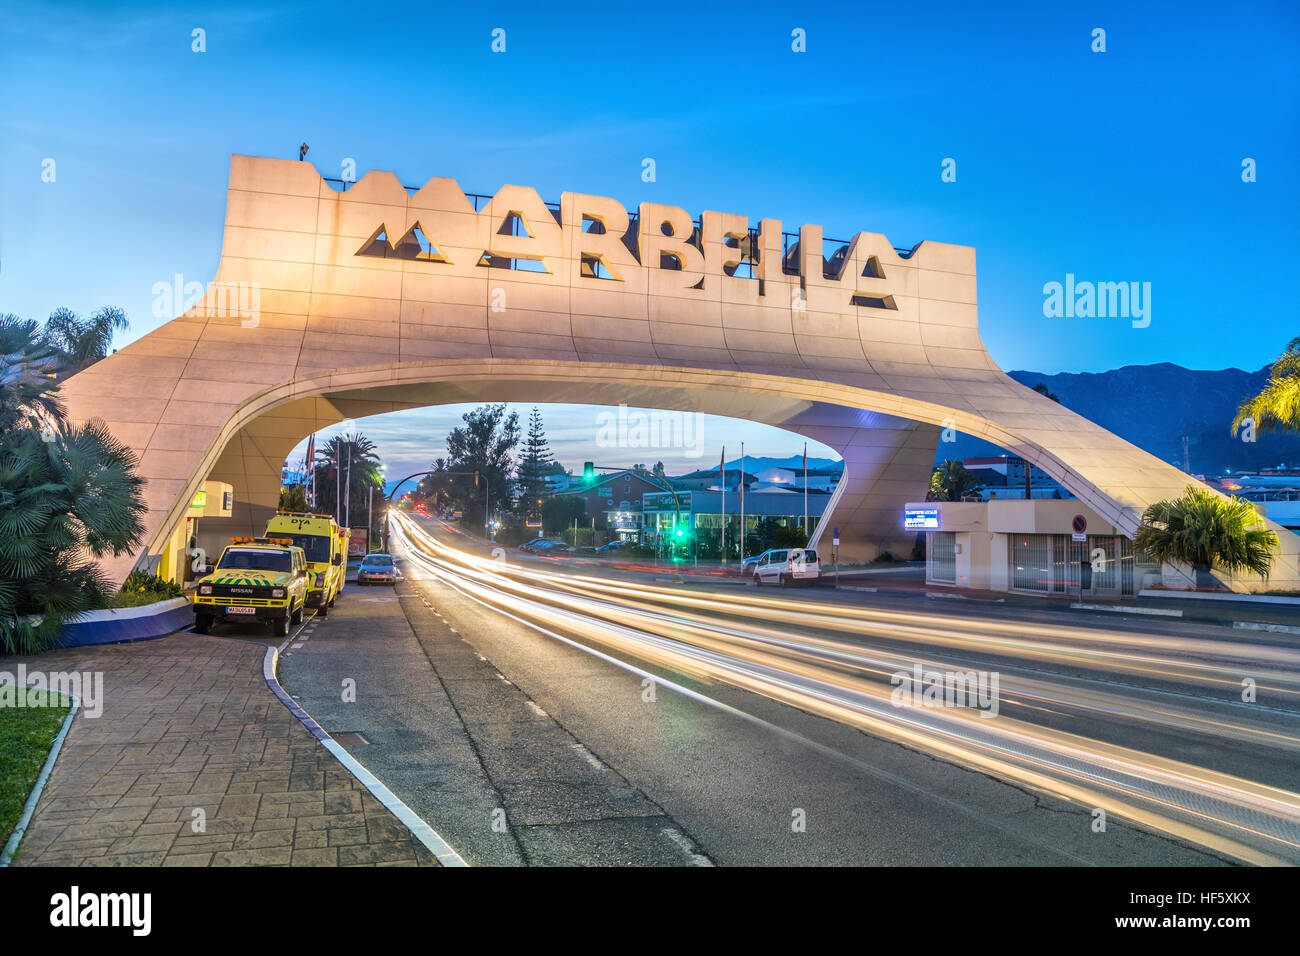 Marbella, Spain - December 26 2016: Marbella Entrance Arch at dusk Stock Photo